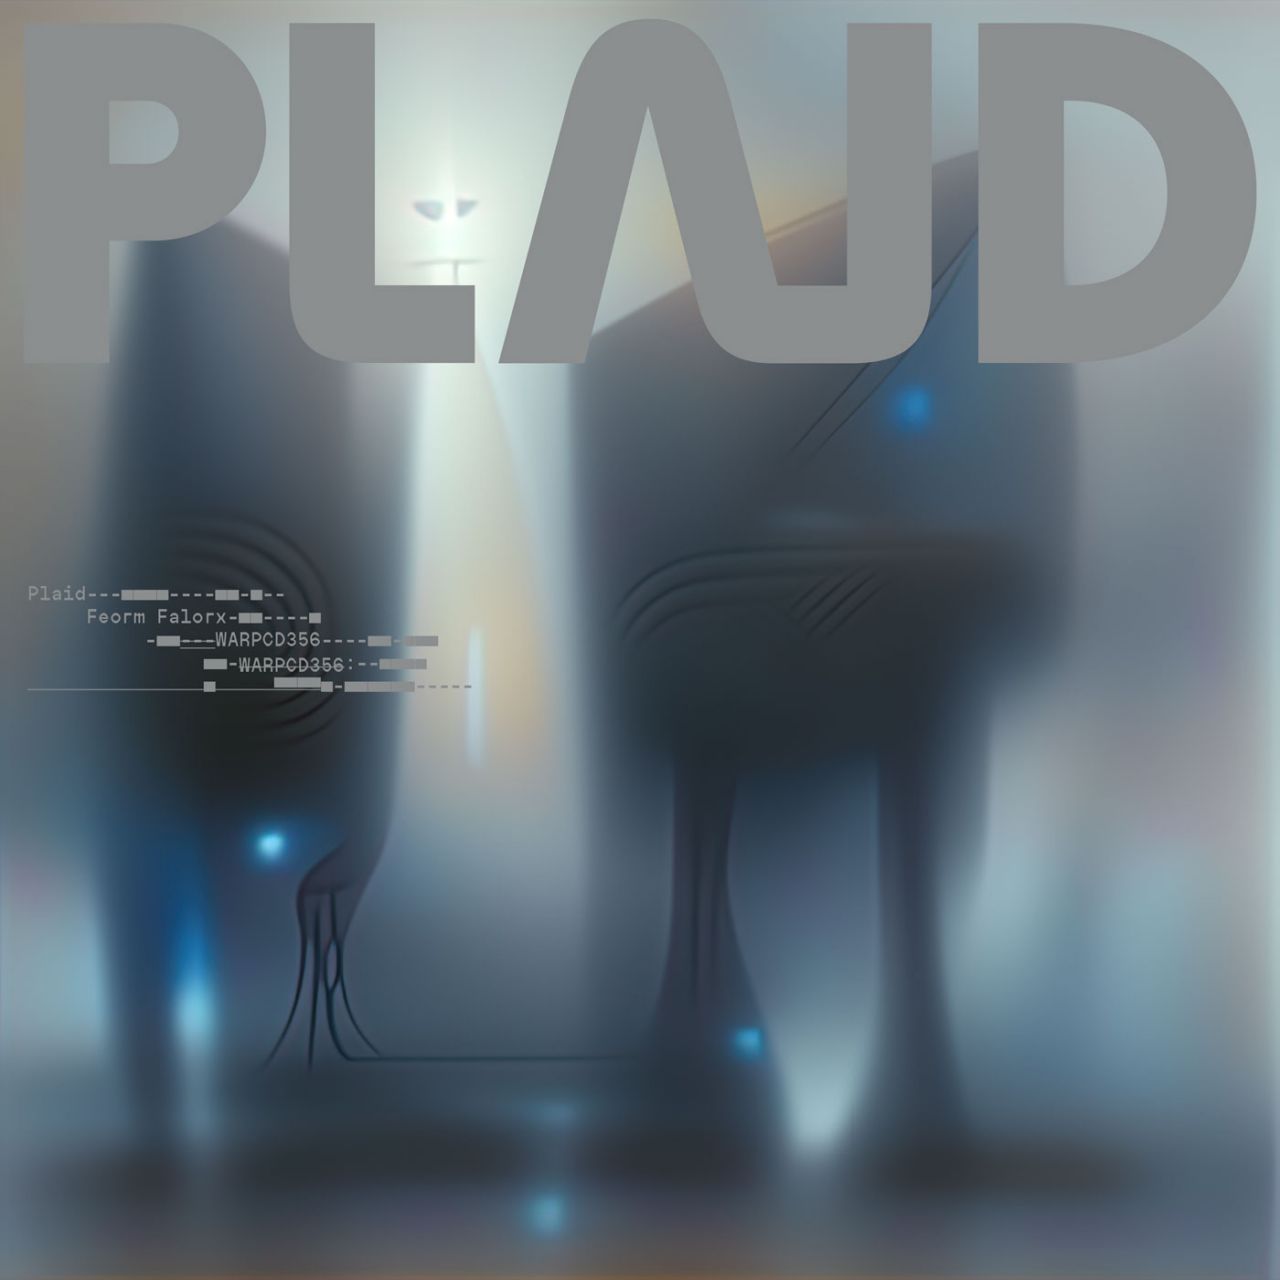 Plaid - Feorm Falorx - CD